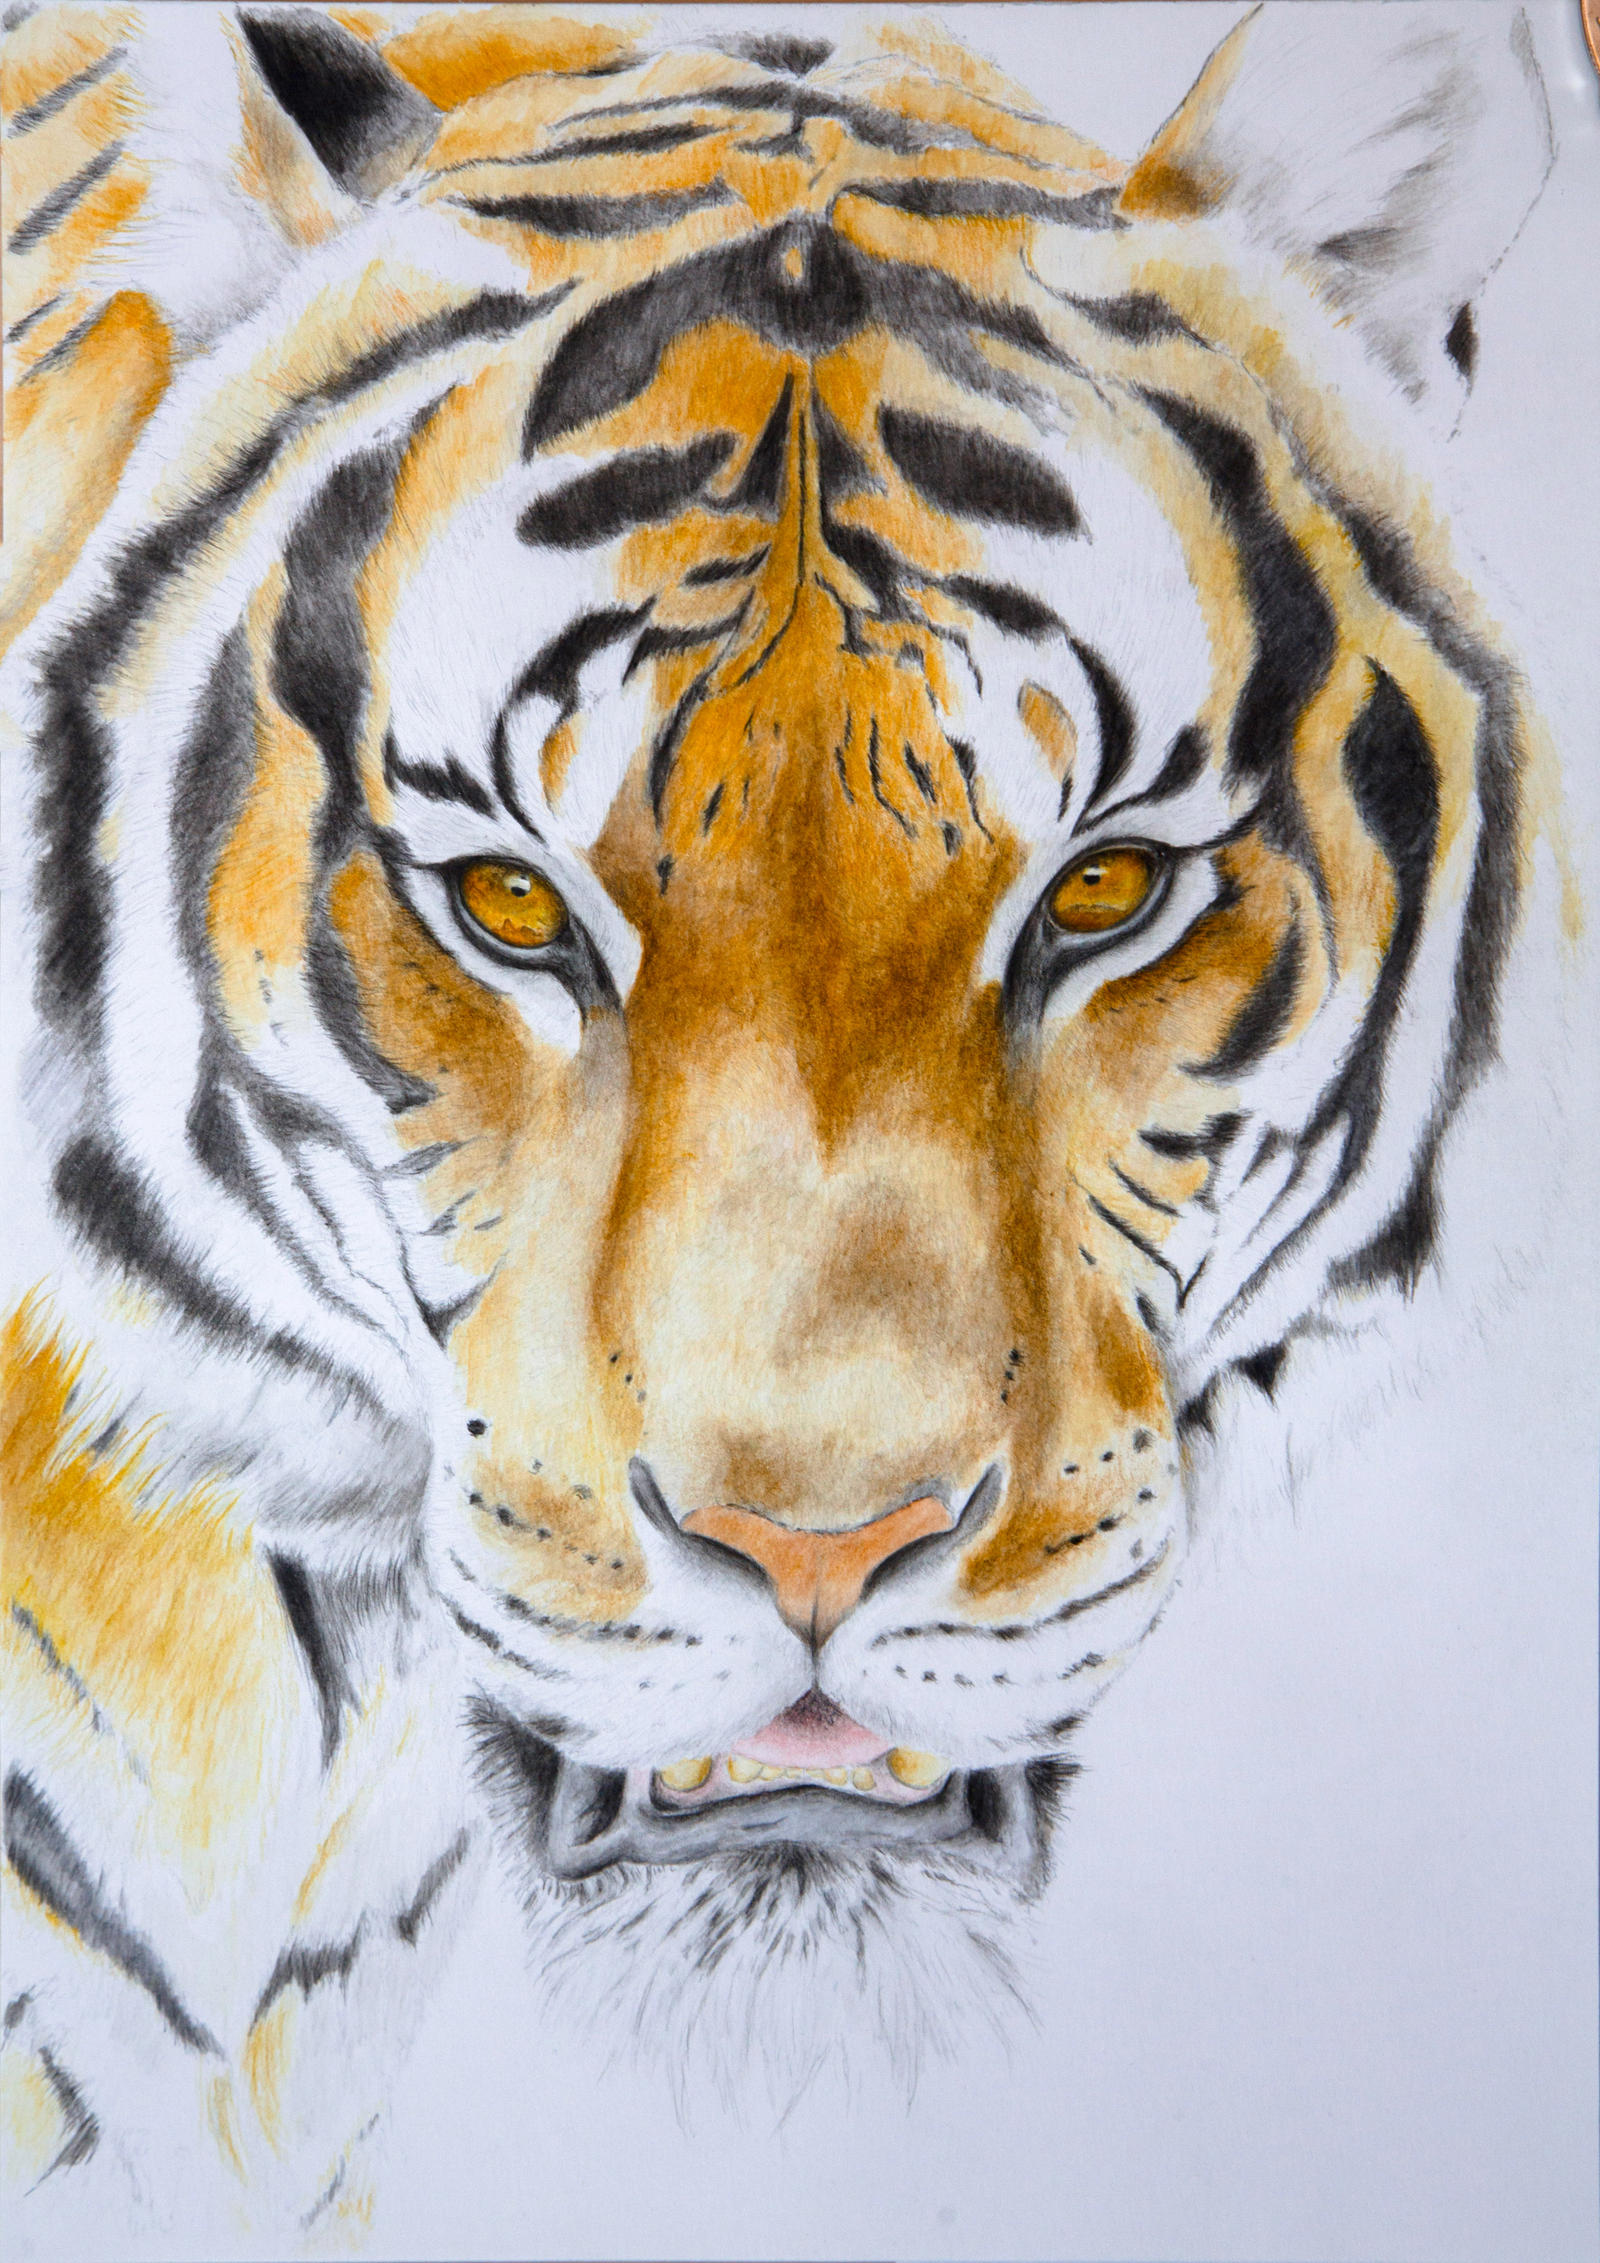 Water Color Pencil Tiger by Arahn-Lion on DeviantArt